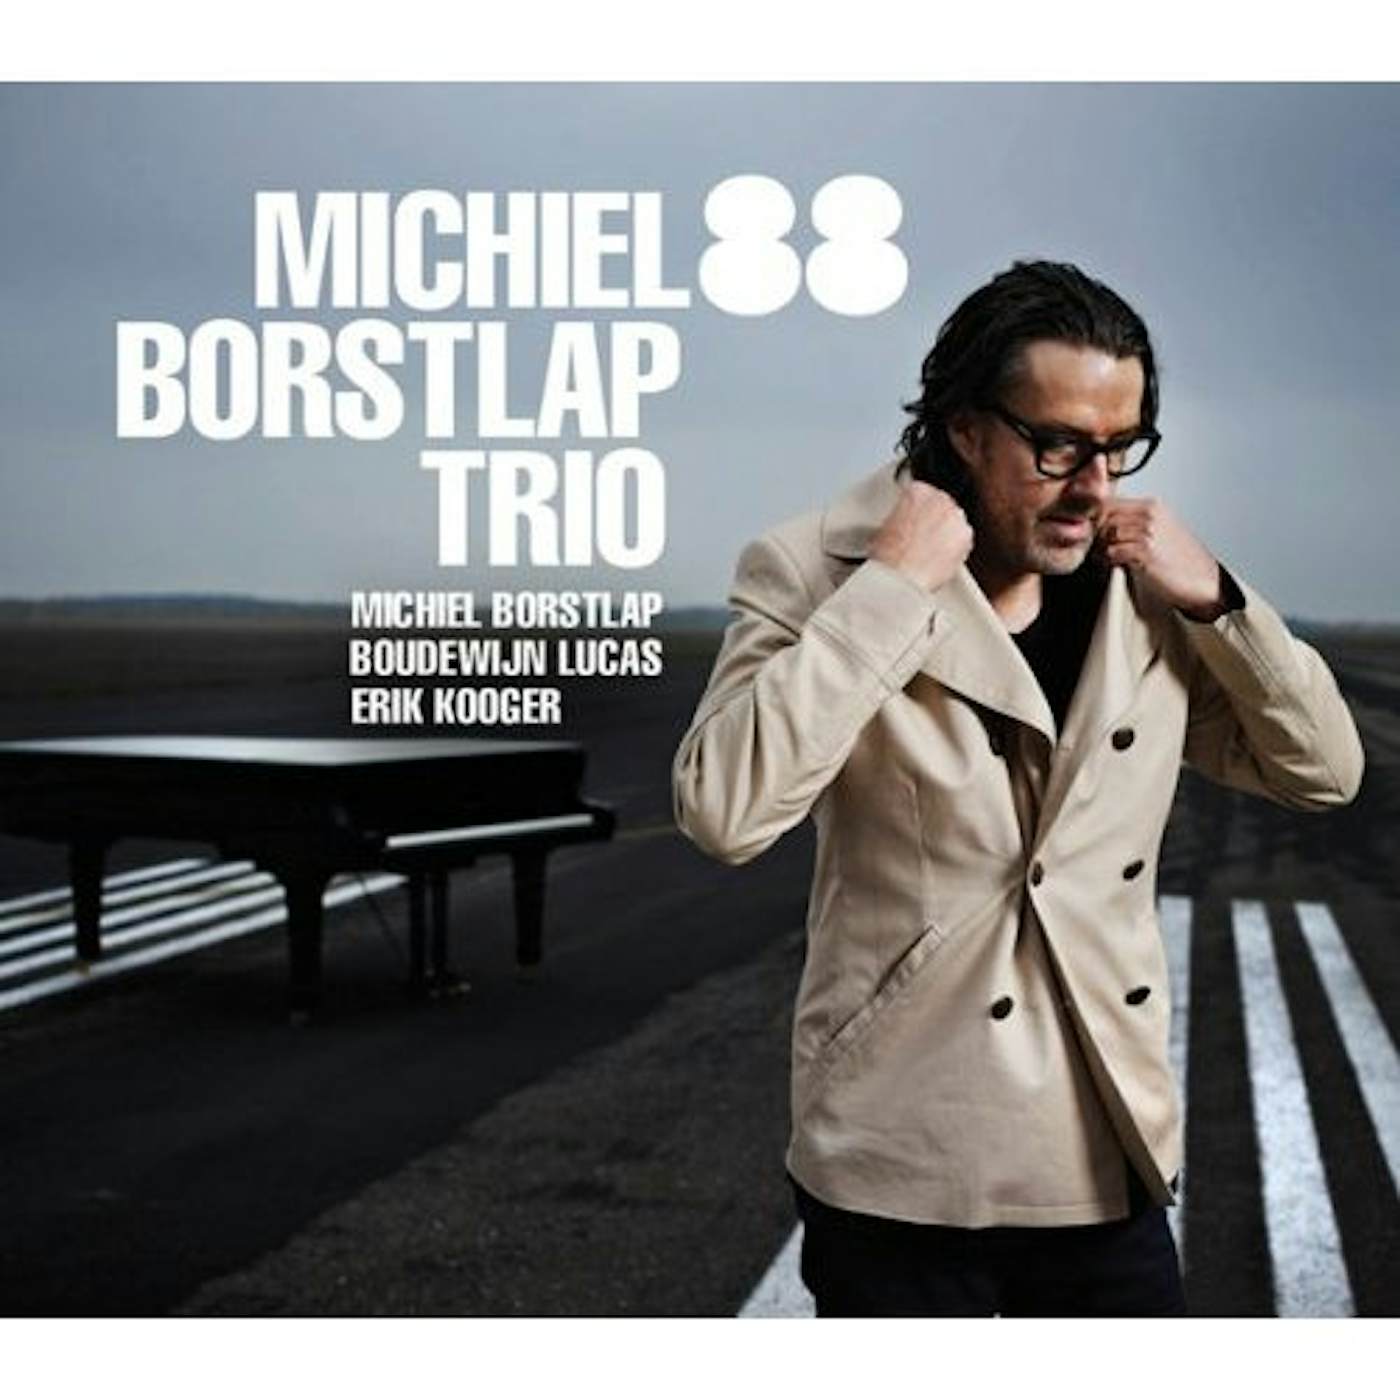 Michiel Borstlap 88 CD